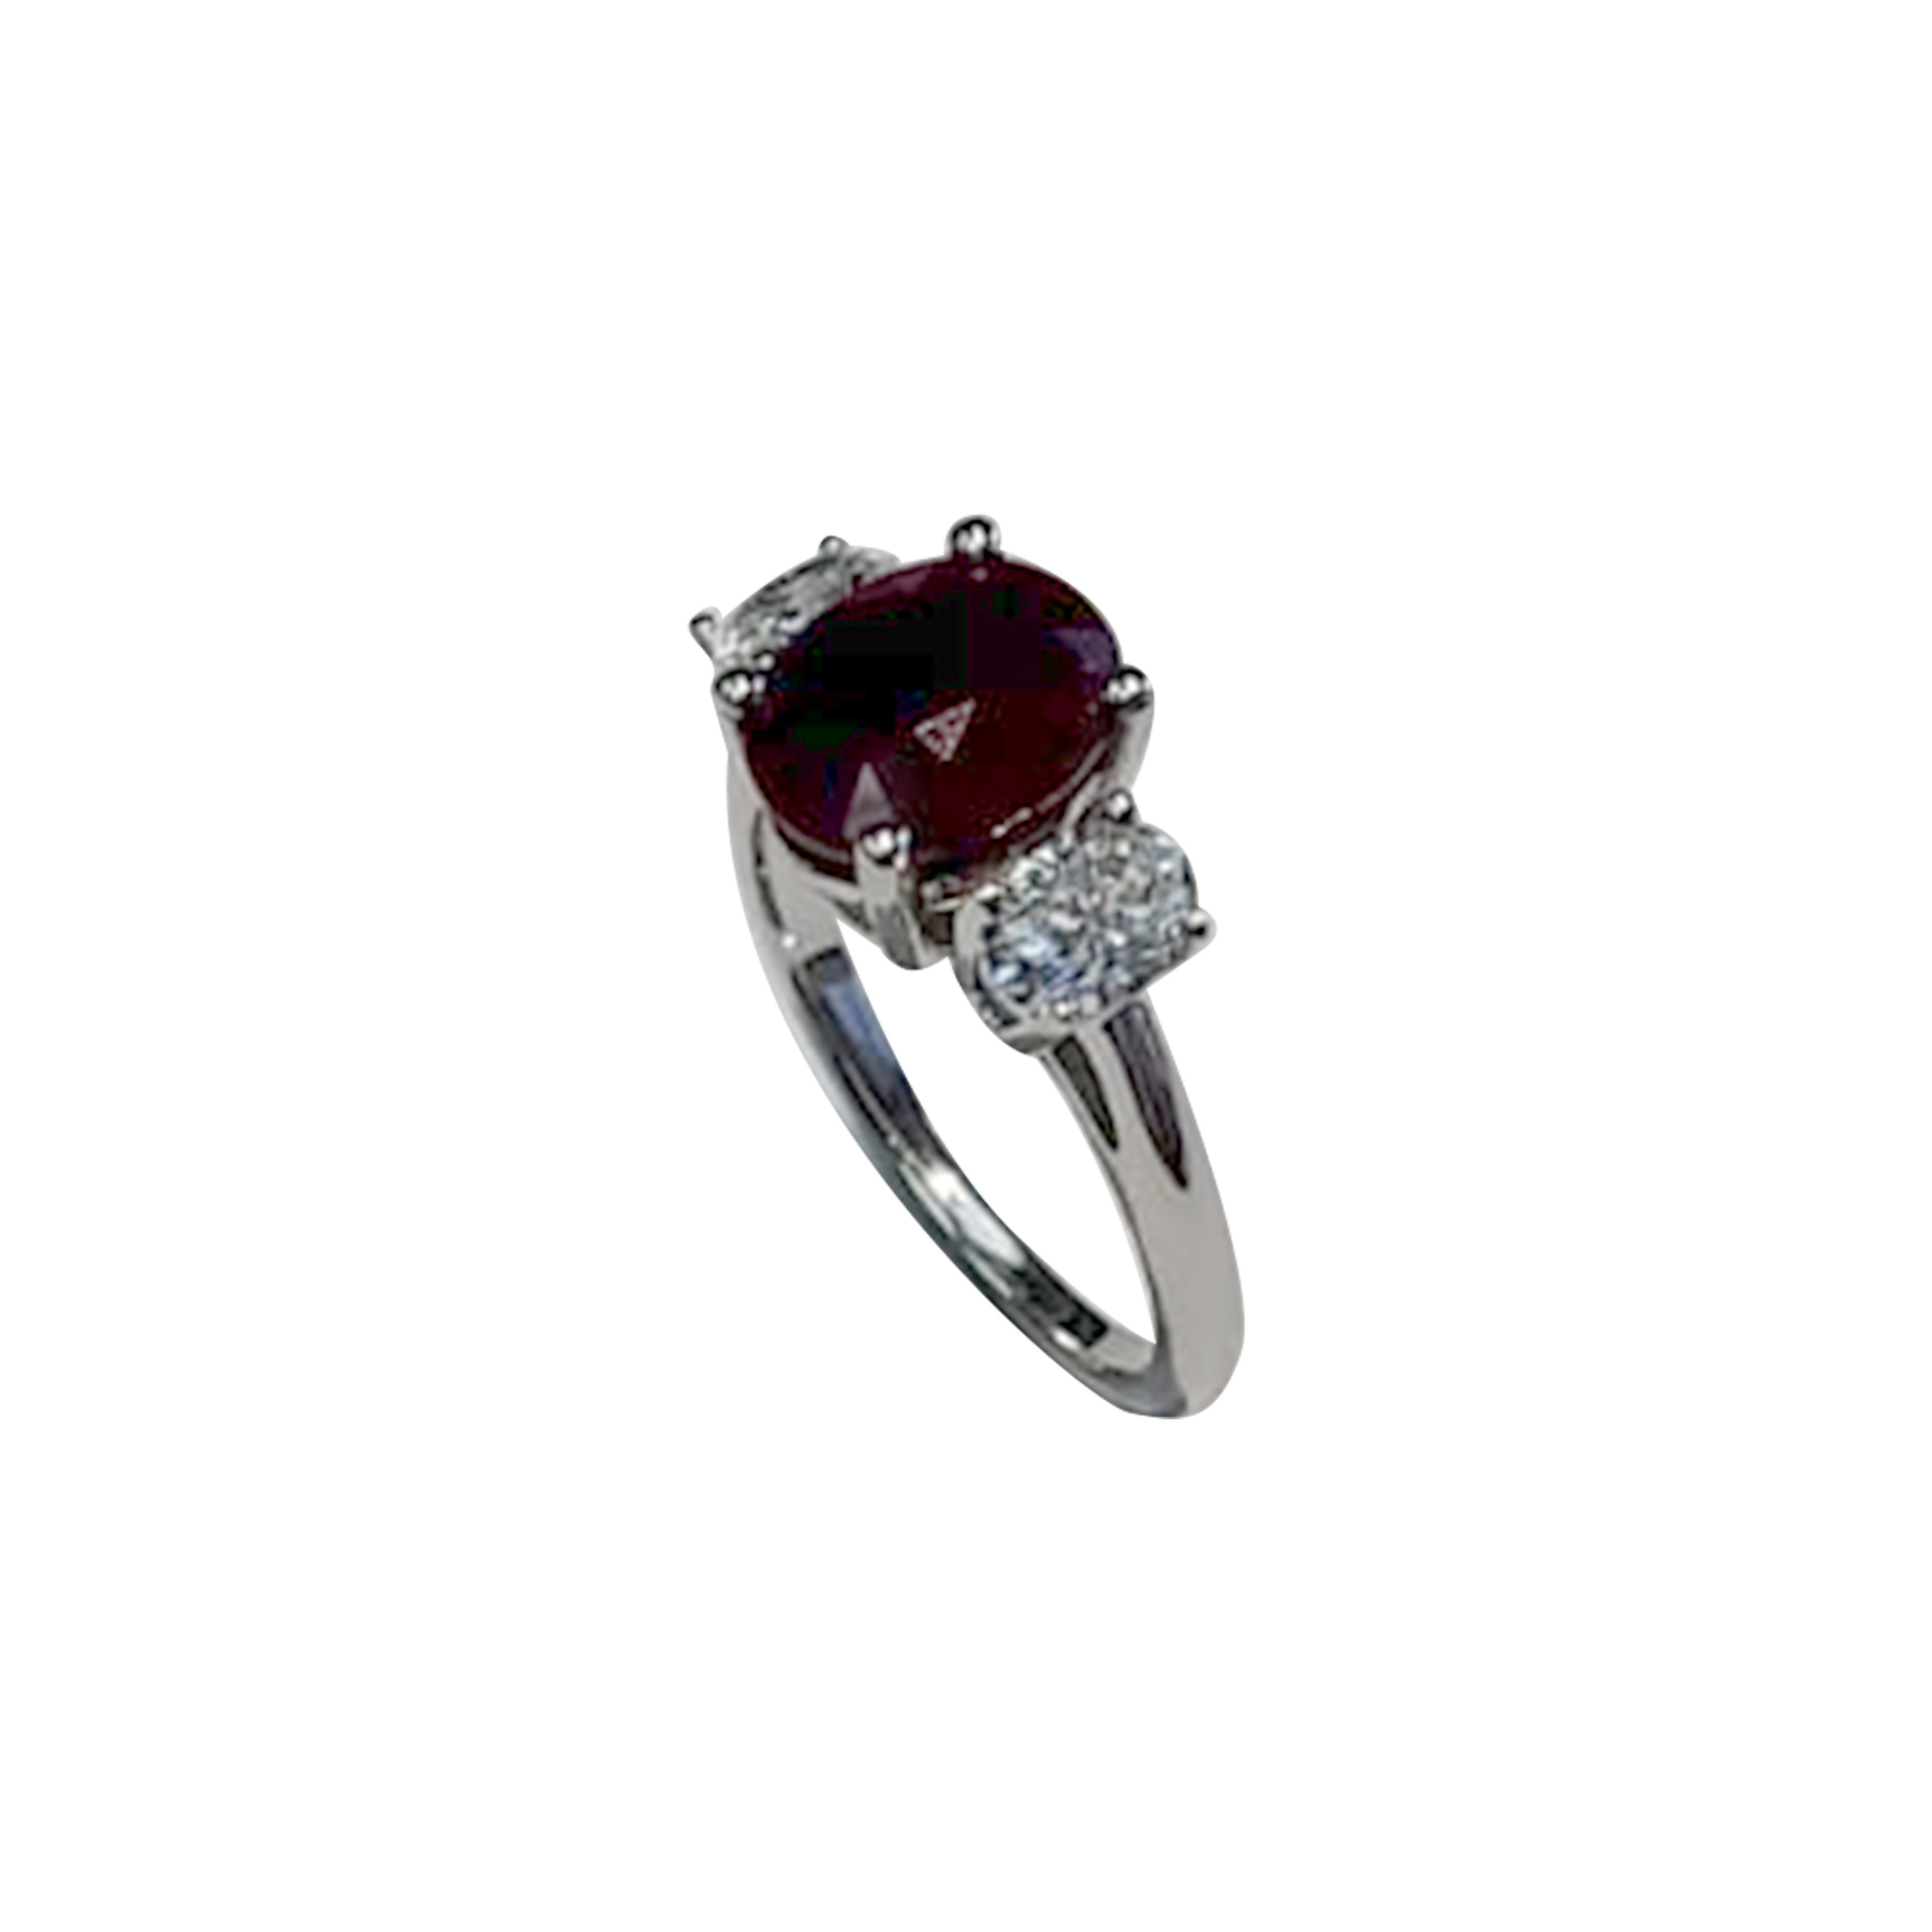 Beautiful 2.90ct Ruby fashion ring accompanied by two 0.78ct diamonds